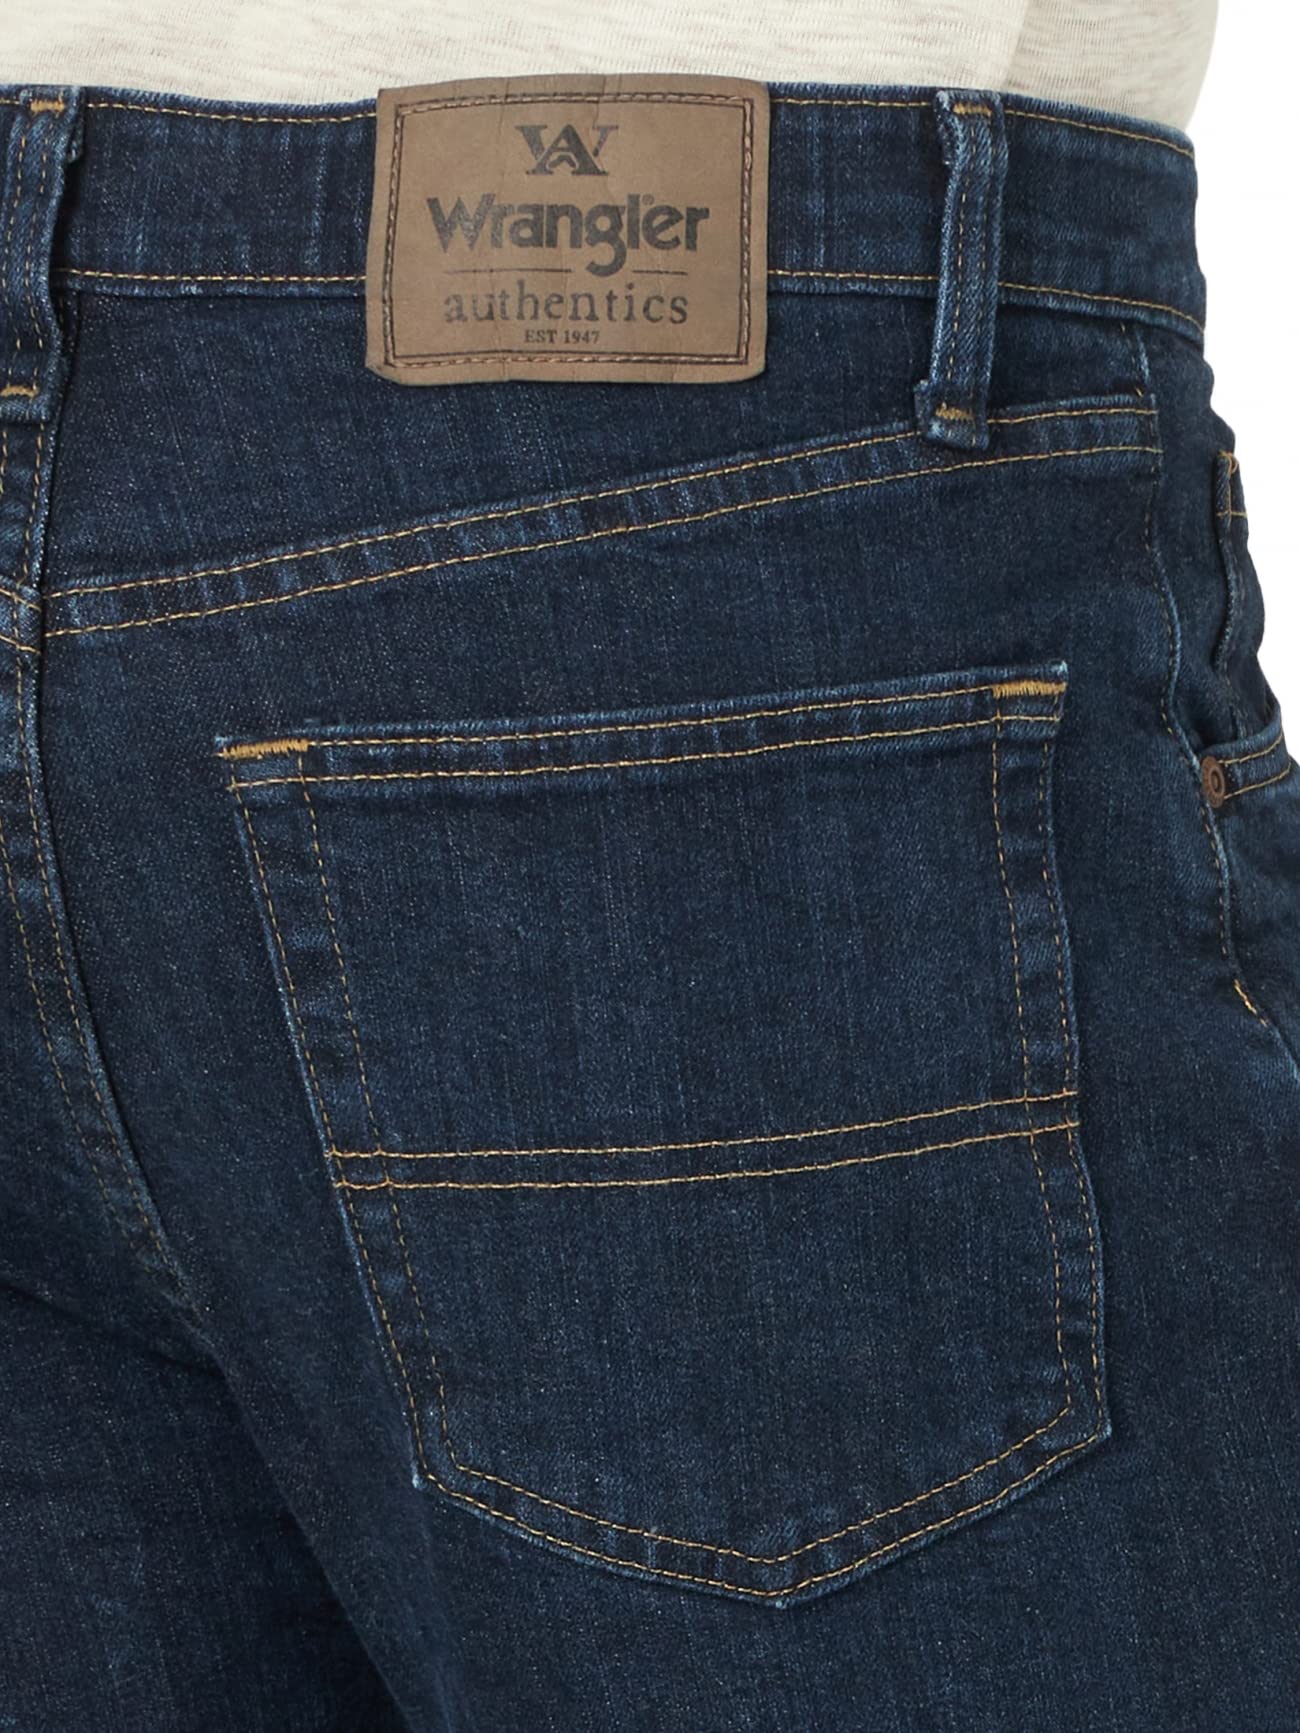 Wrangler Authentics Men's Big & Tall Regular Fit Comfort Flex Waist Jean, Dark Indigo, 48W x 30L